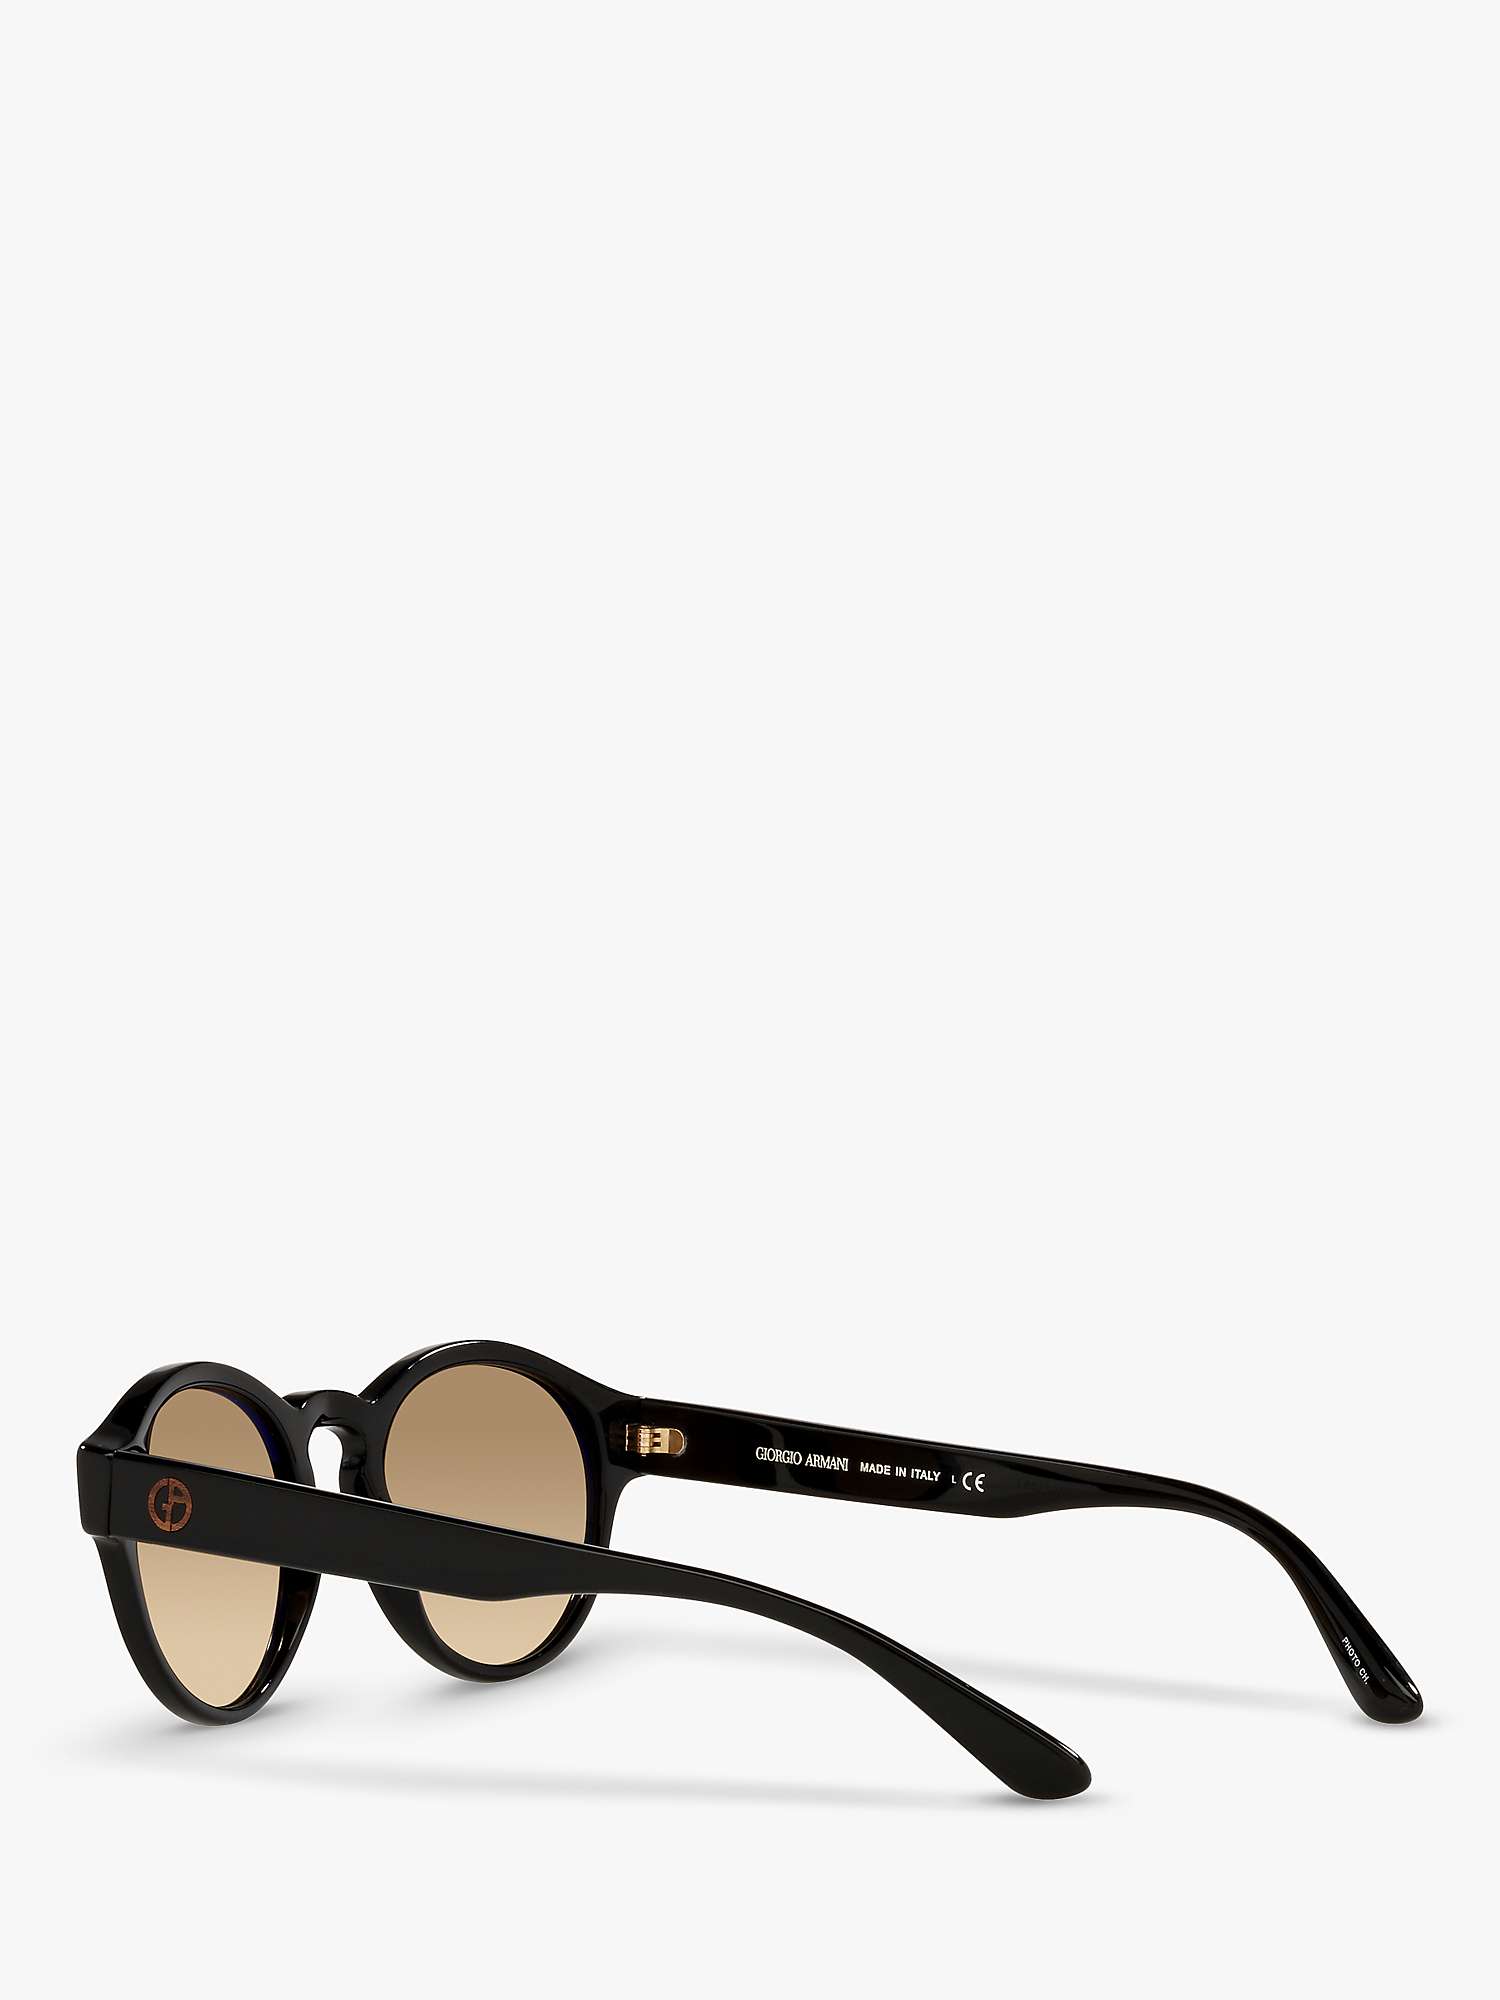 Buy Giorgio Armani AR8146 Women's Oval Sunglasses, Black/Beige Gradient Online at johnlewis.com